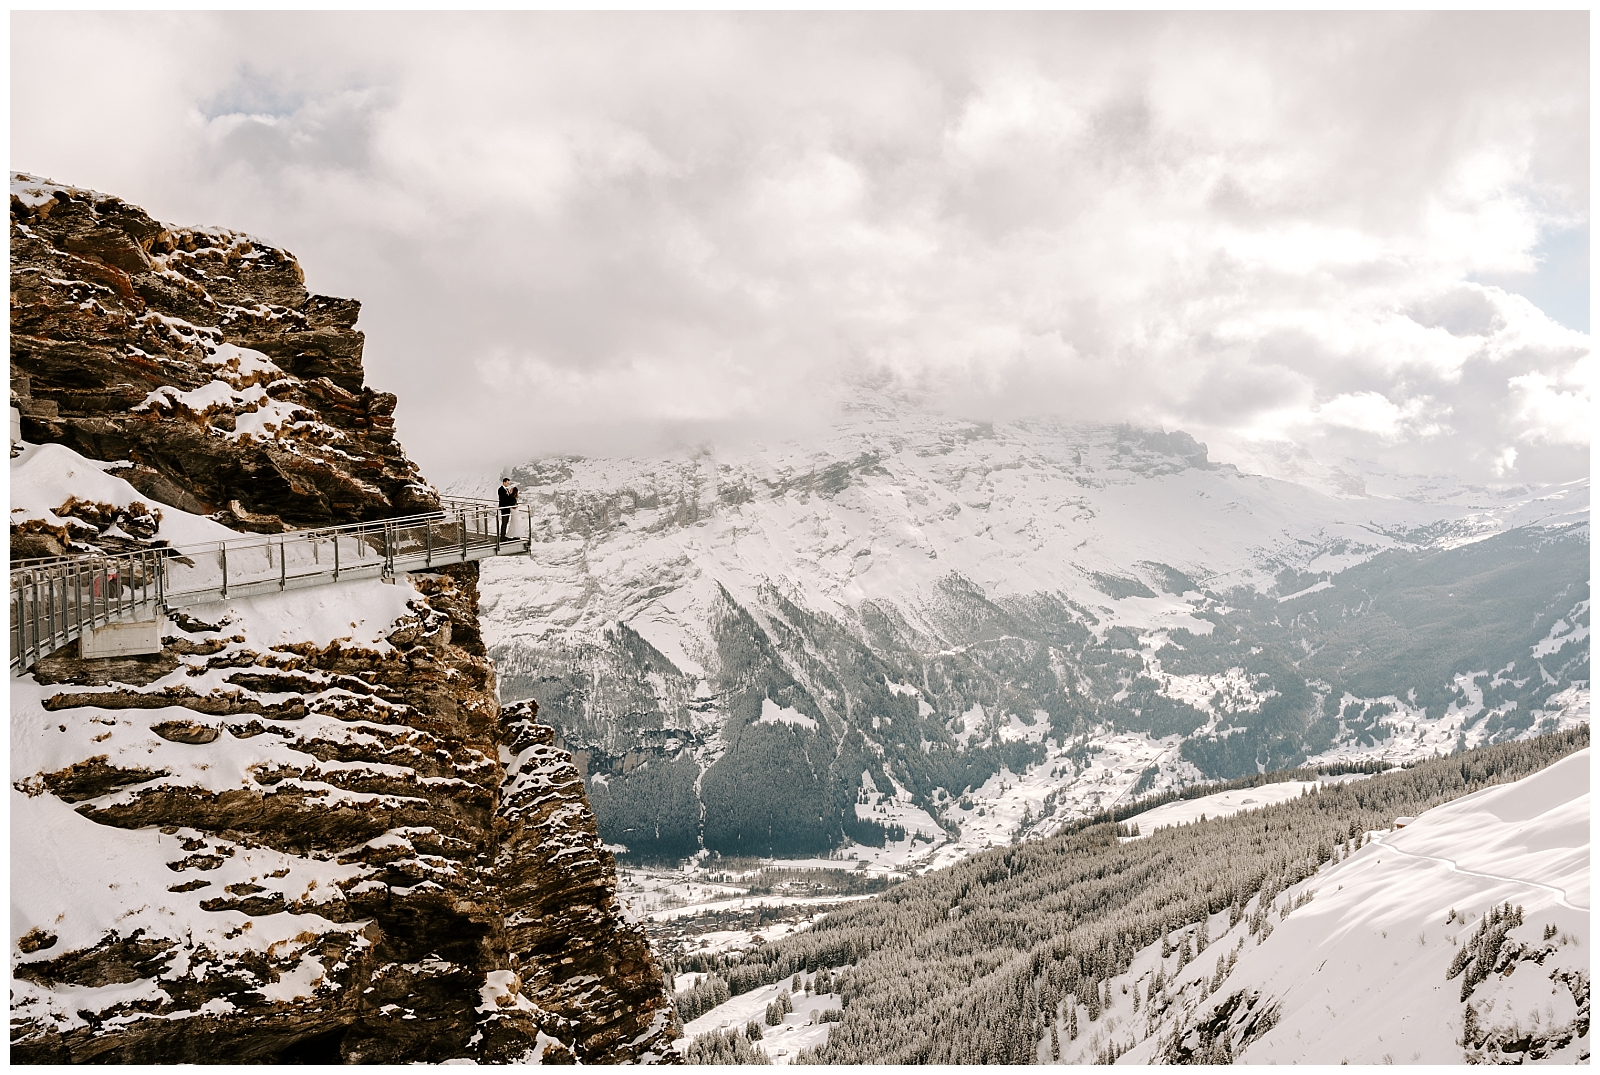 winter elopement in Switzerland in the mountains